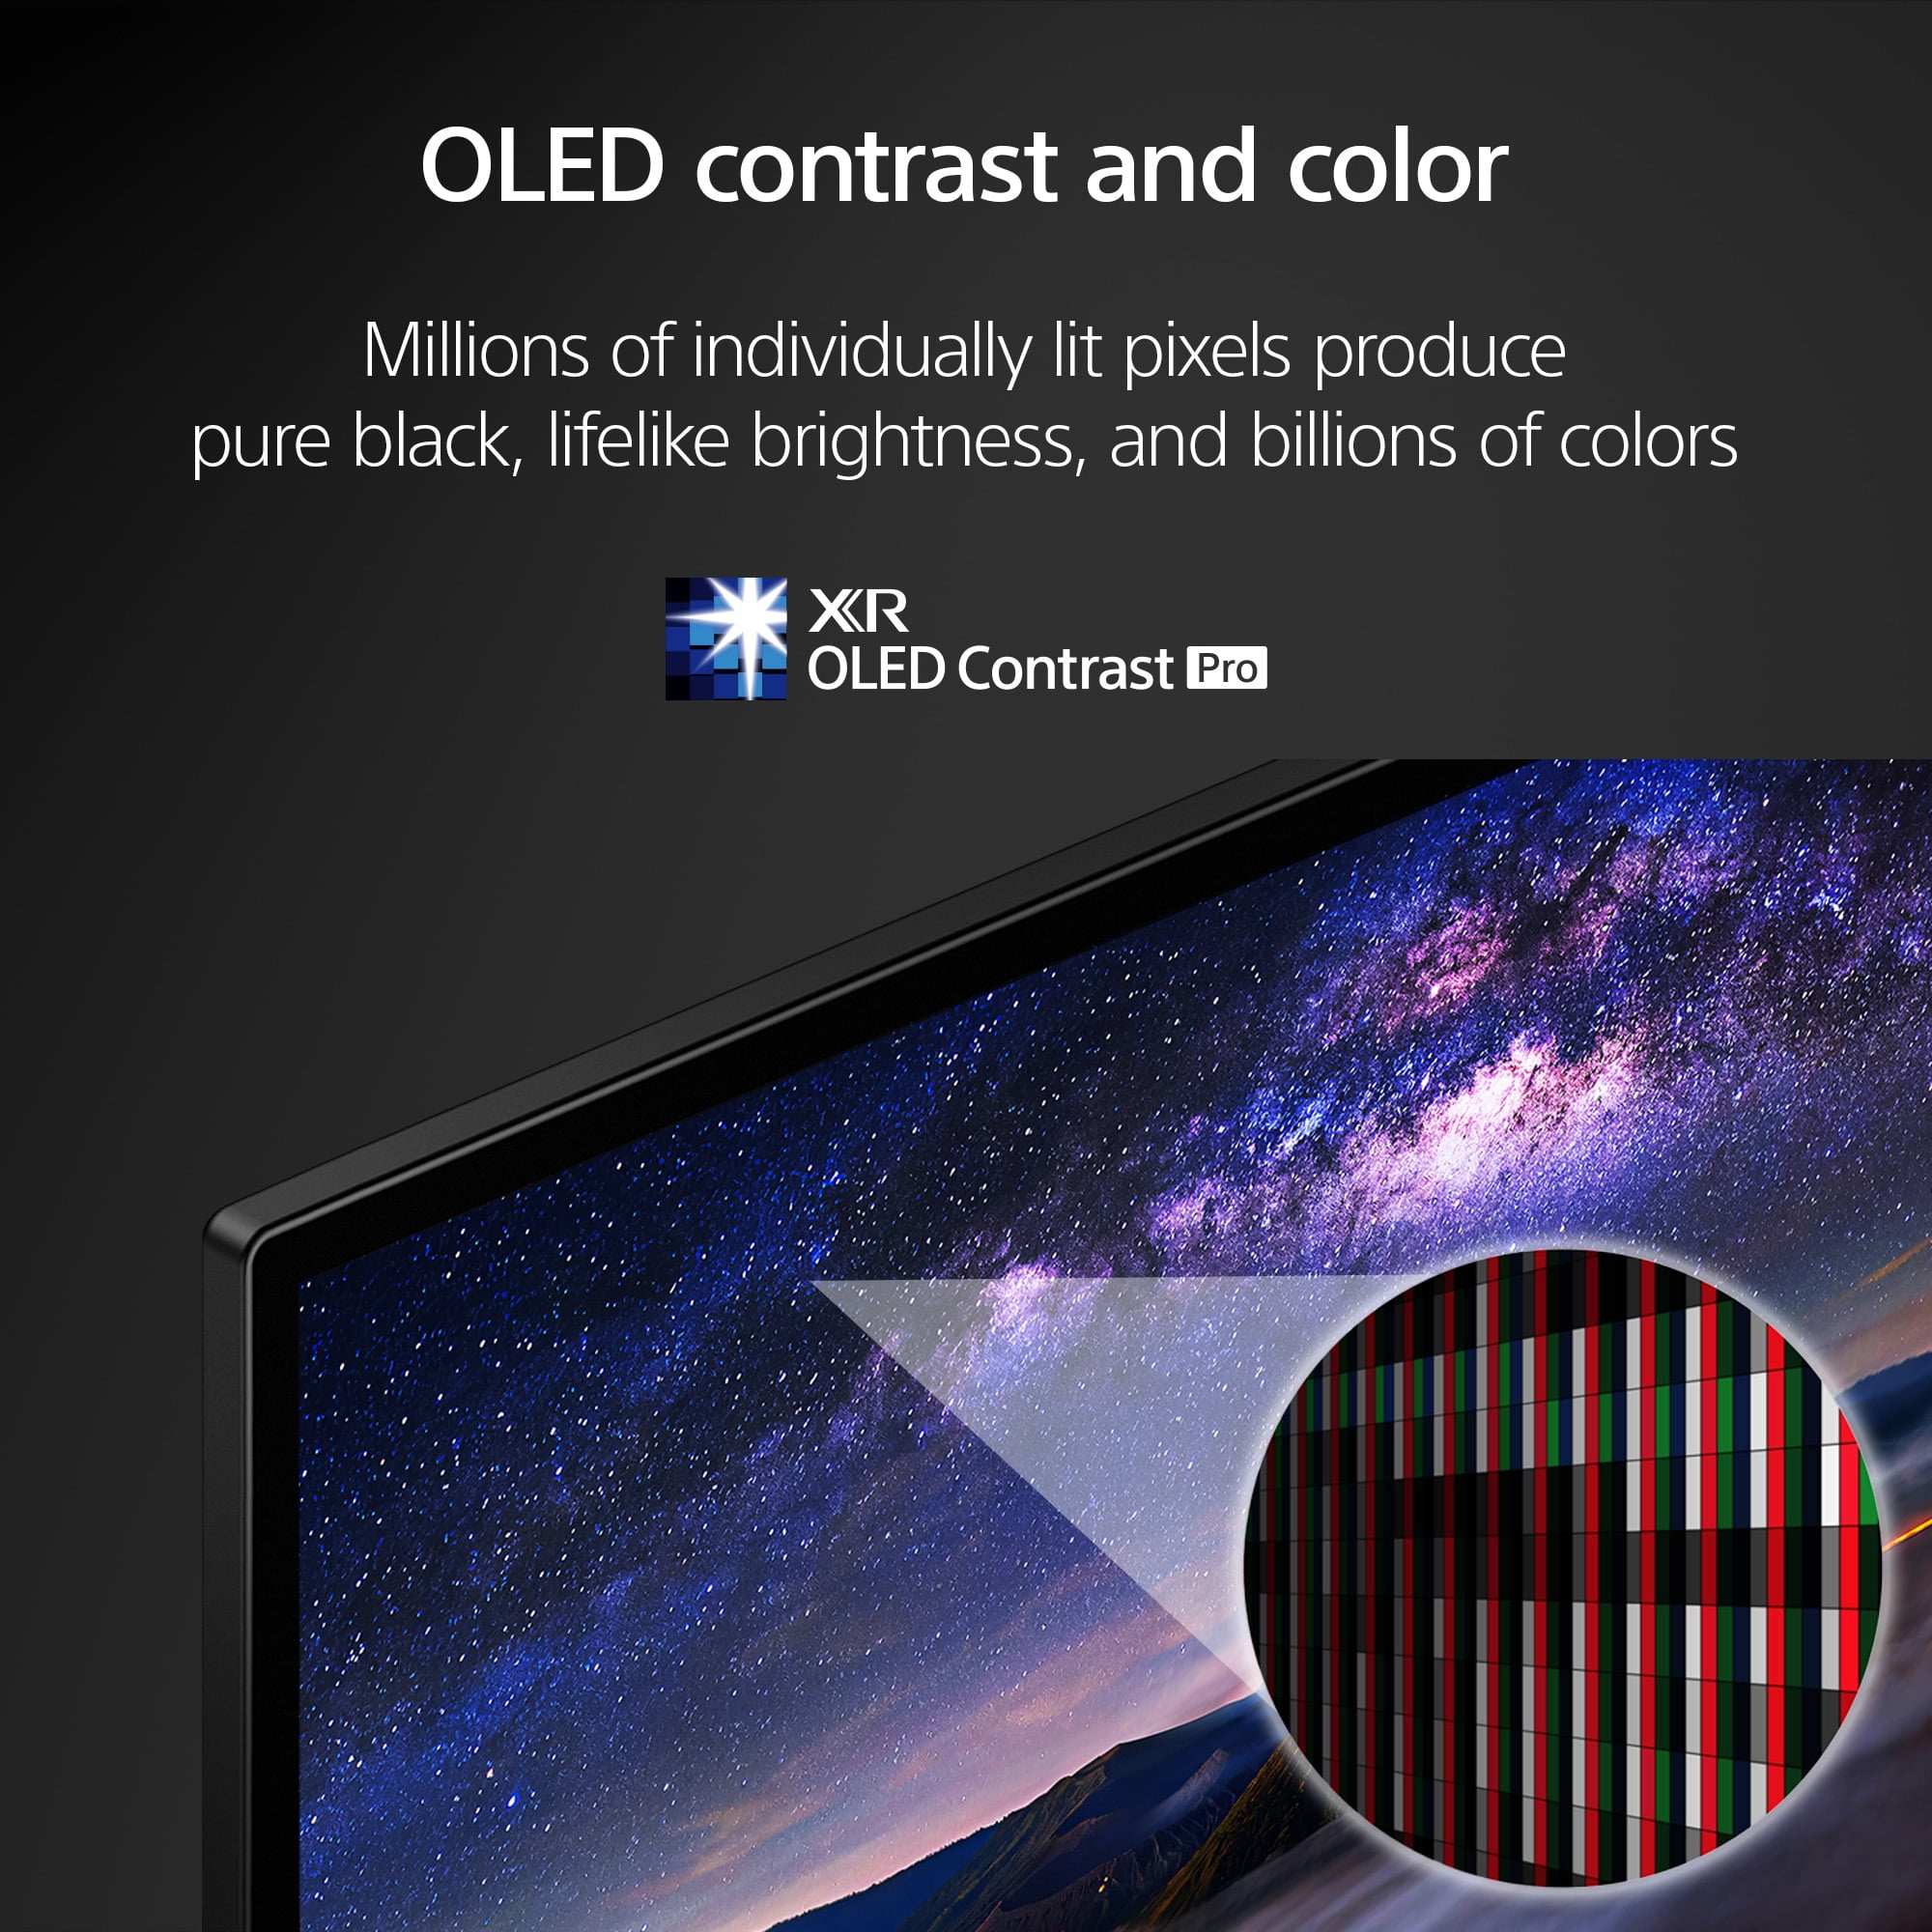 Pantalla Sony OLED smart TV de 83 pulgadas 4K XR-83A80L con Google TV